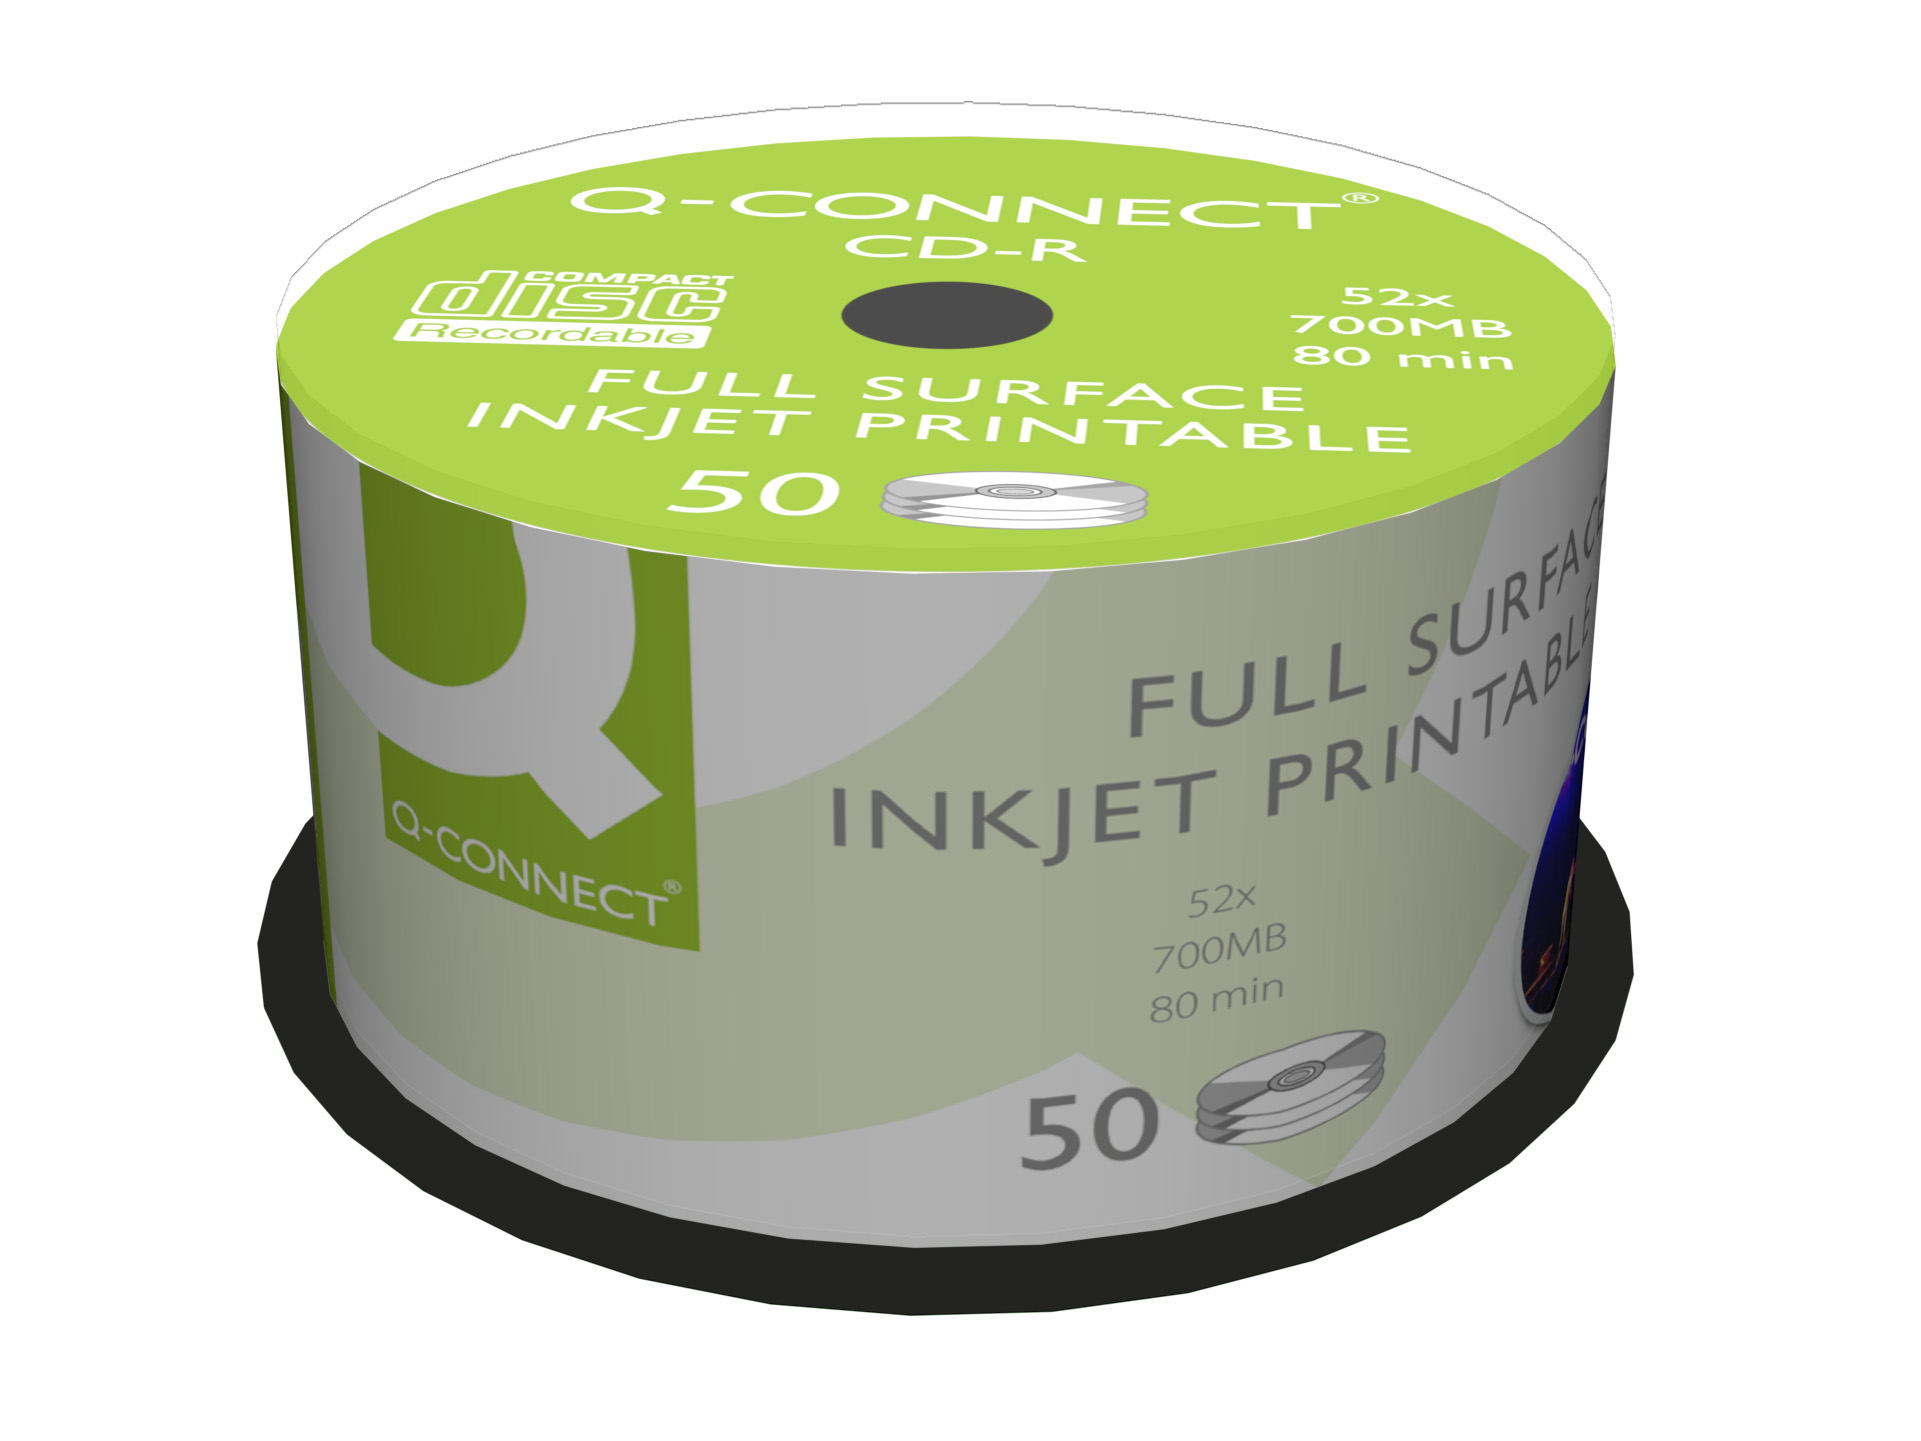 full-surface-inkjet-printable-cd-r-700mb-cake-50-q-connect